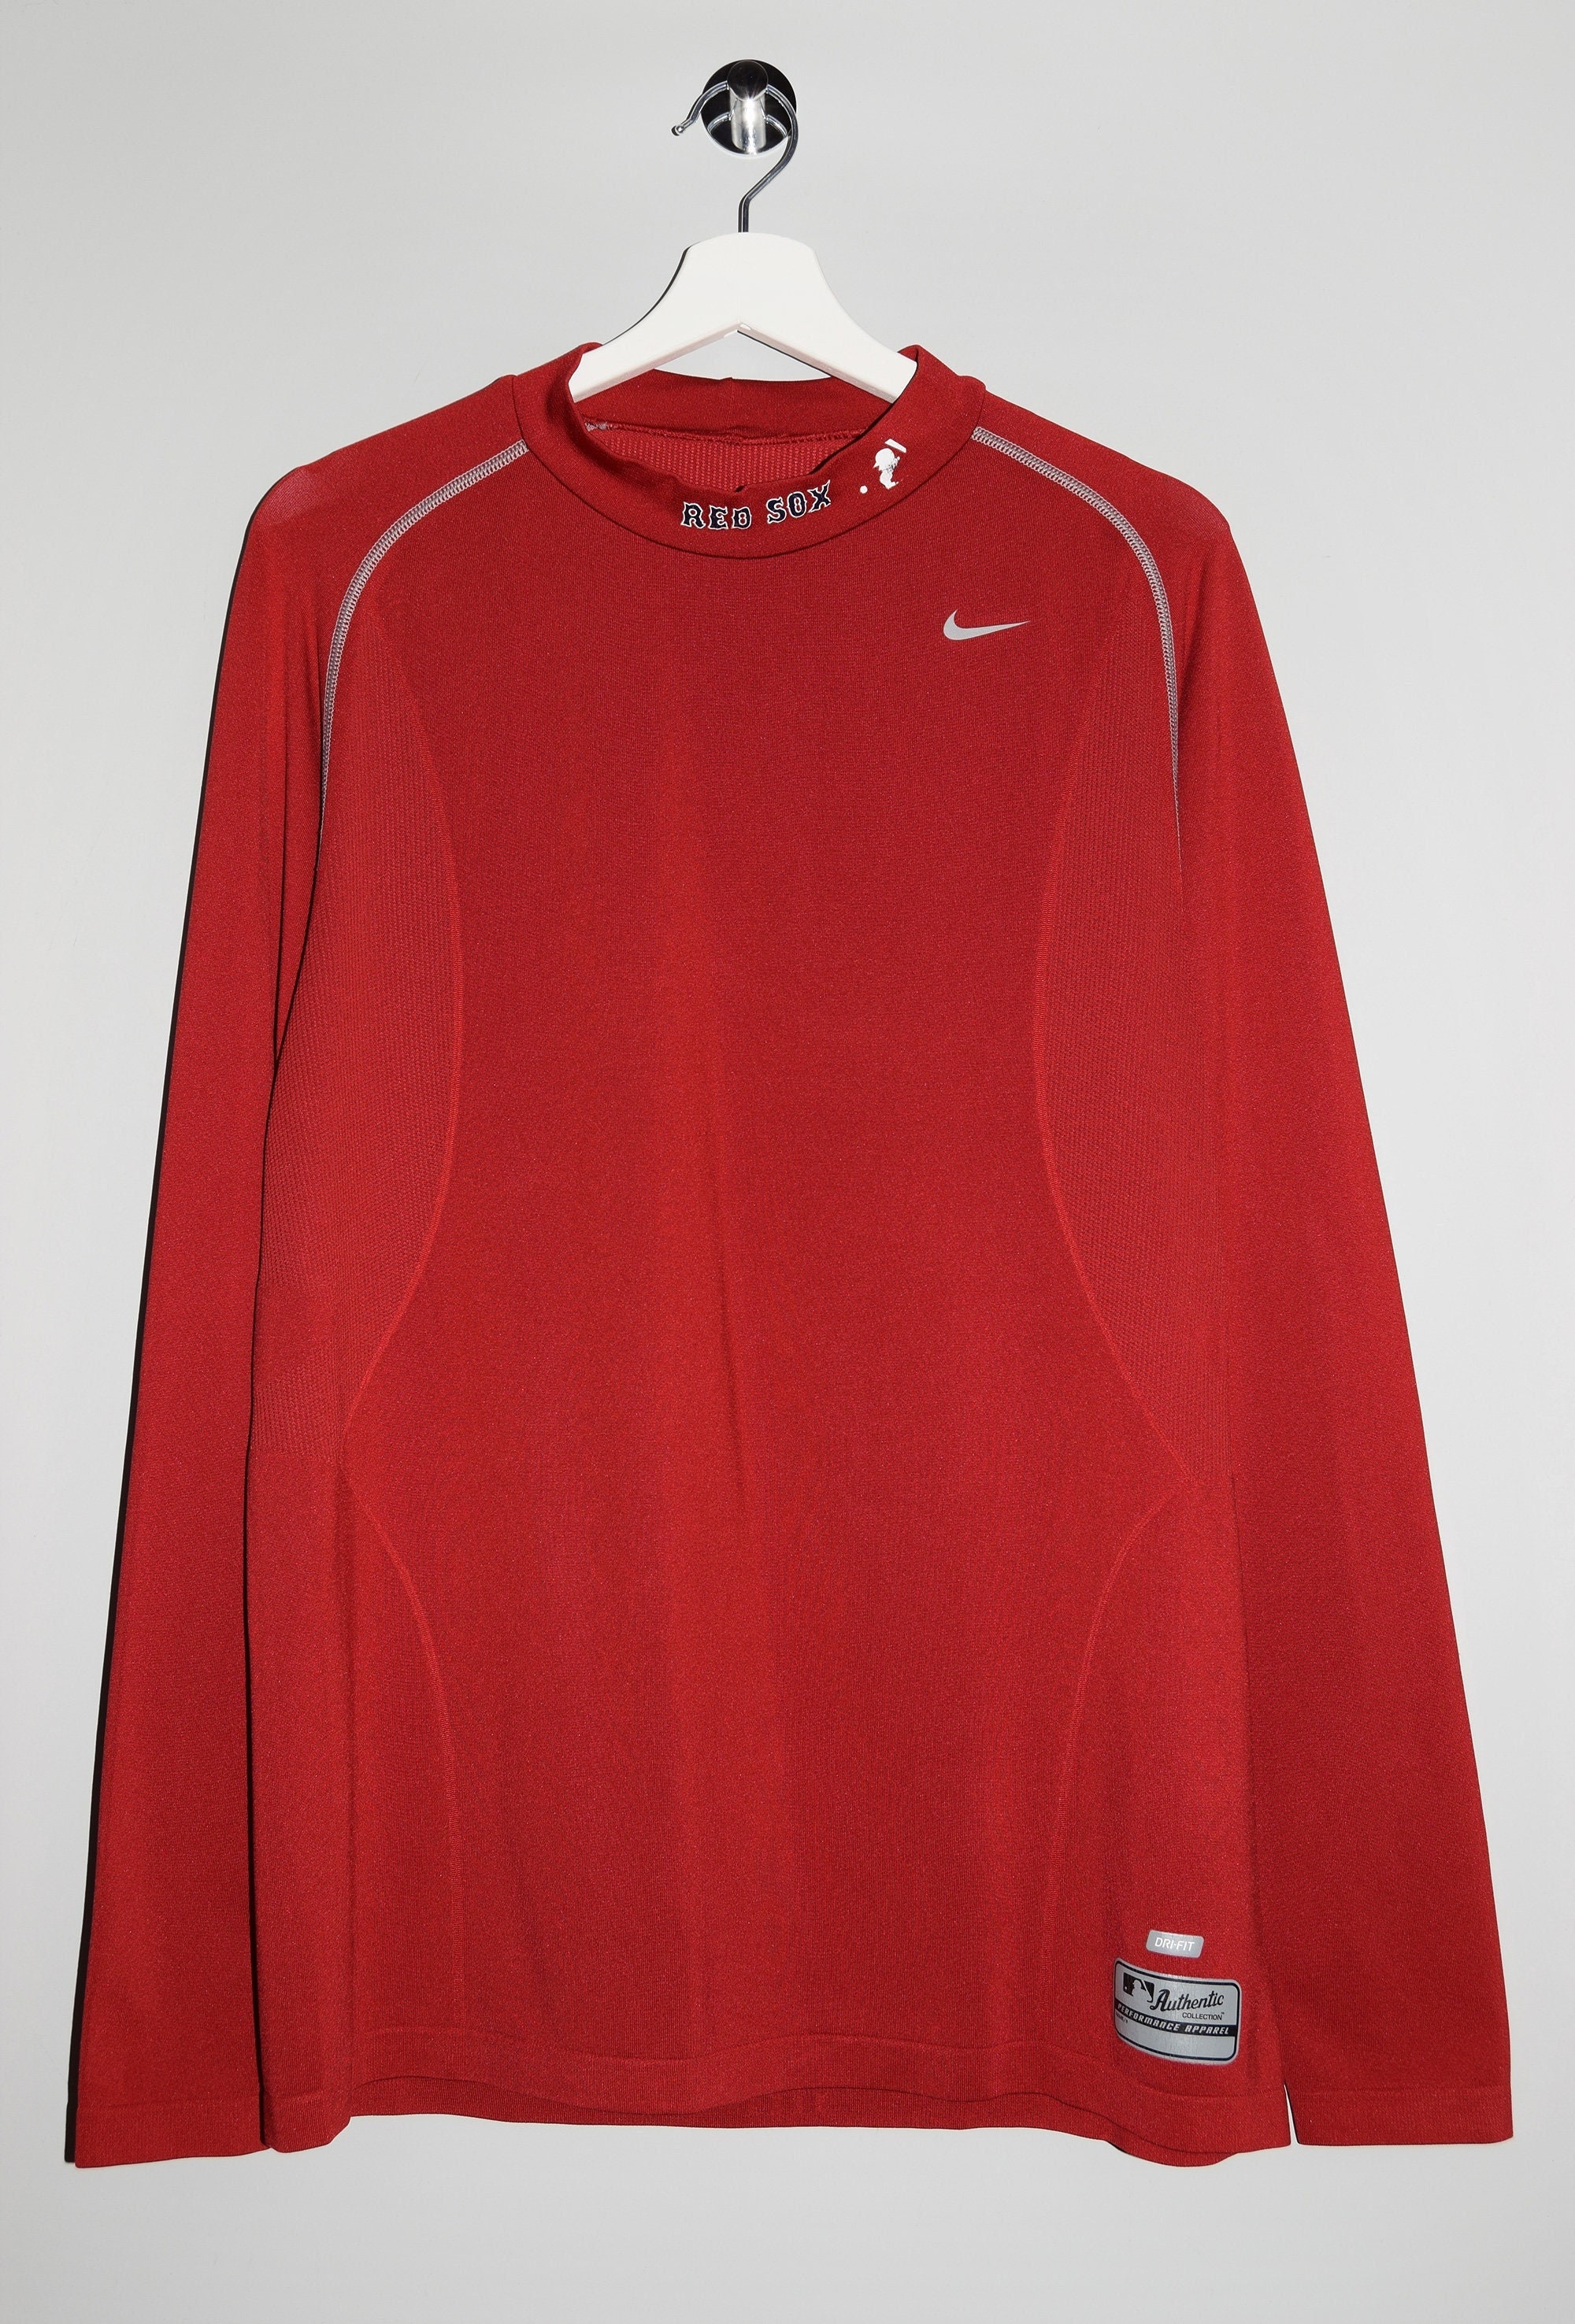 Nike Red Sox Baseball Shirt Long Sleeve Baseball Jersey Red 